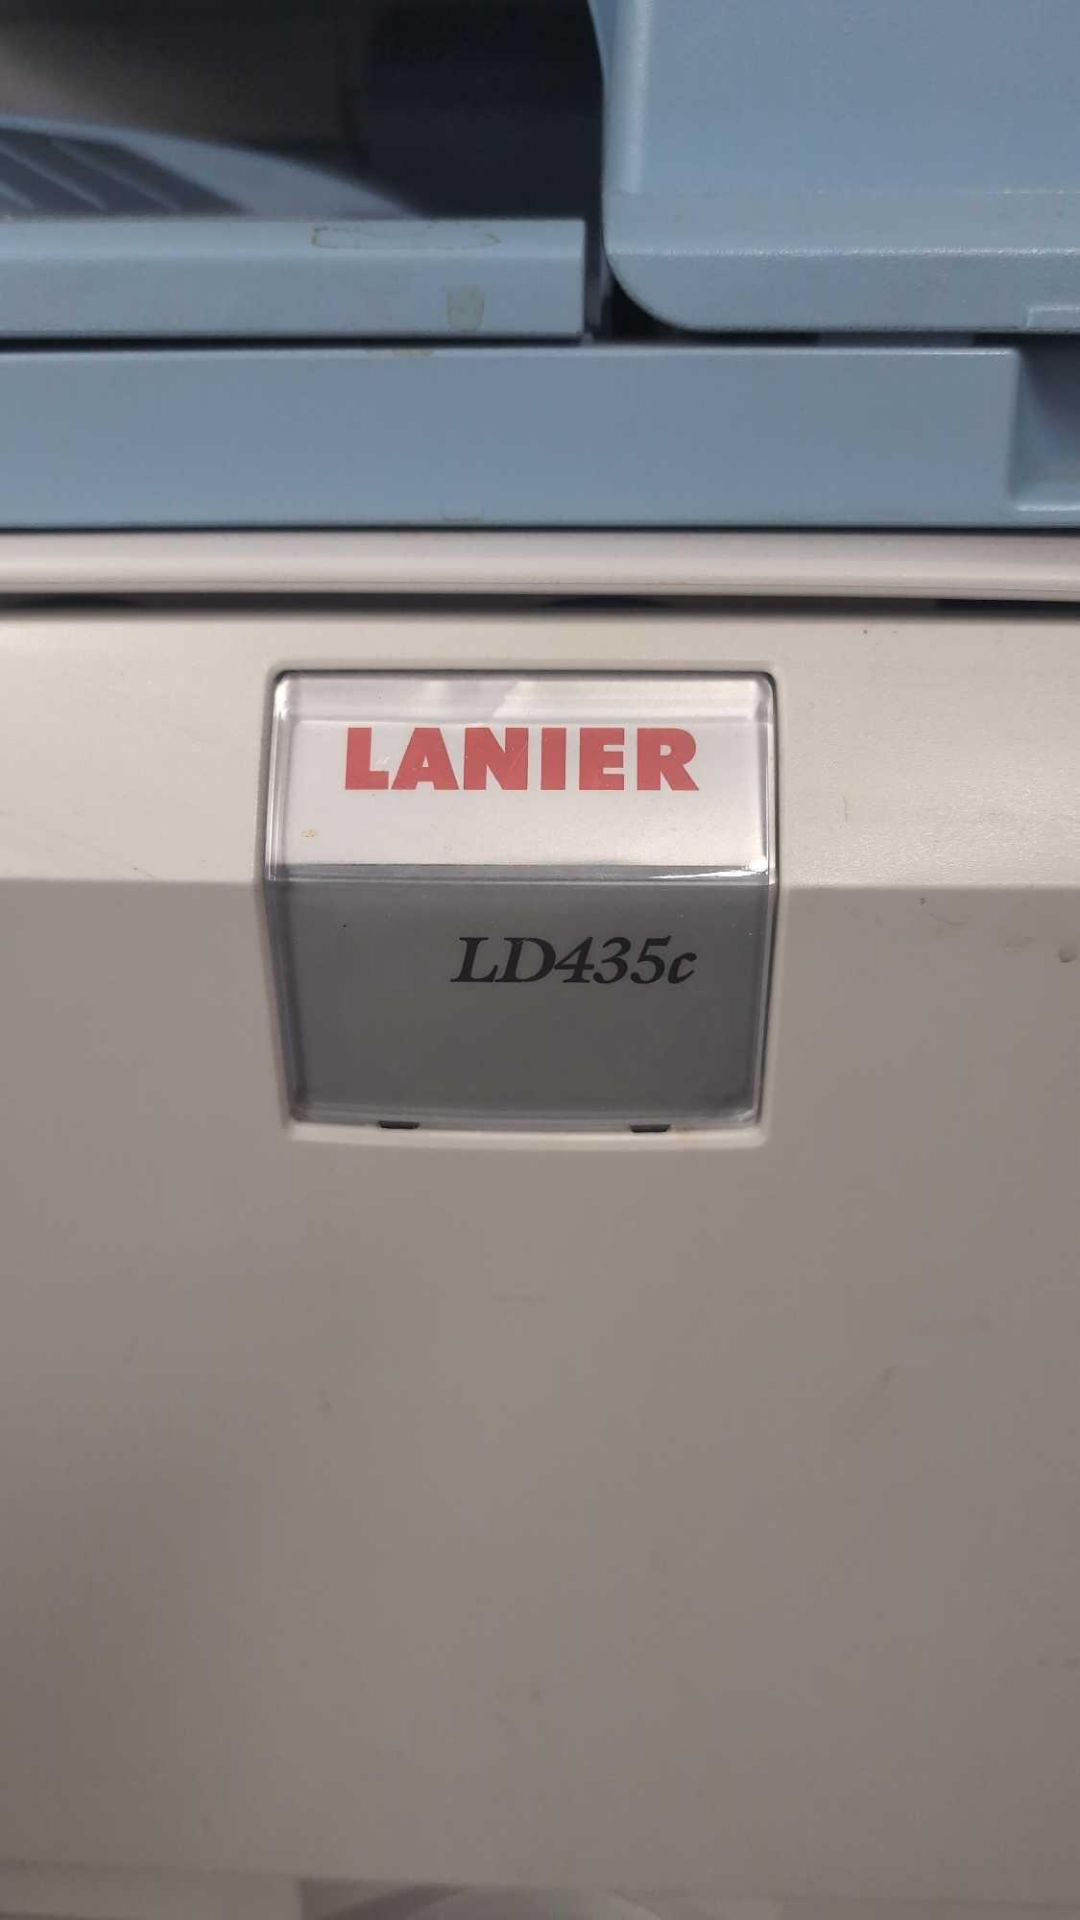 Lanier LD435c used printer - Image 2 of 6